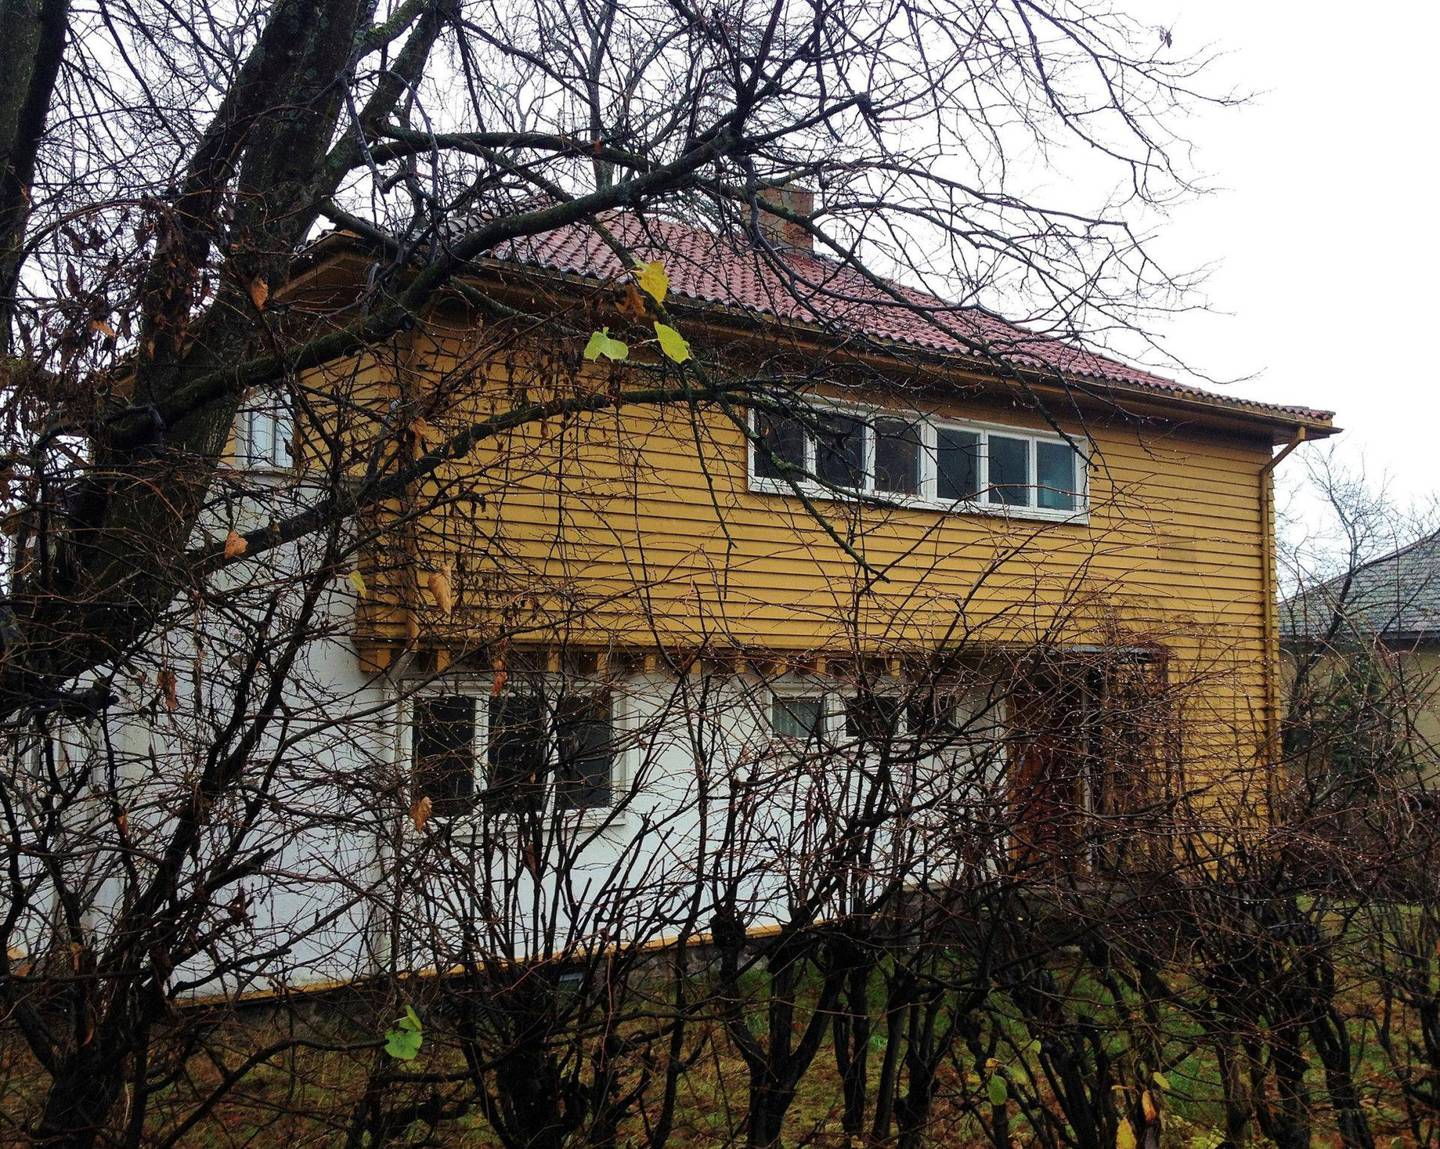 Villa Gleditsch ble revet i 2015.
Foto: Elisabeth Helgeland Wold